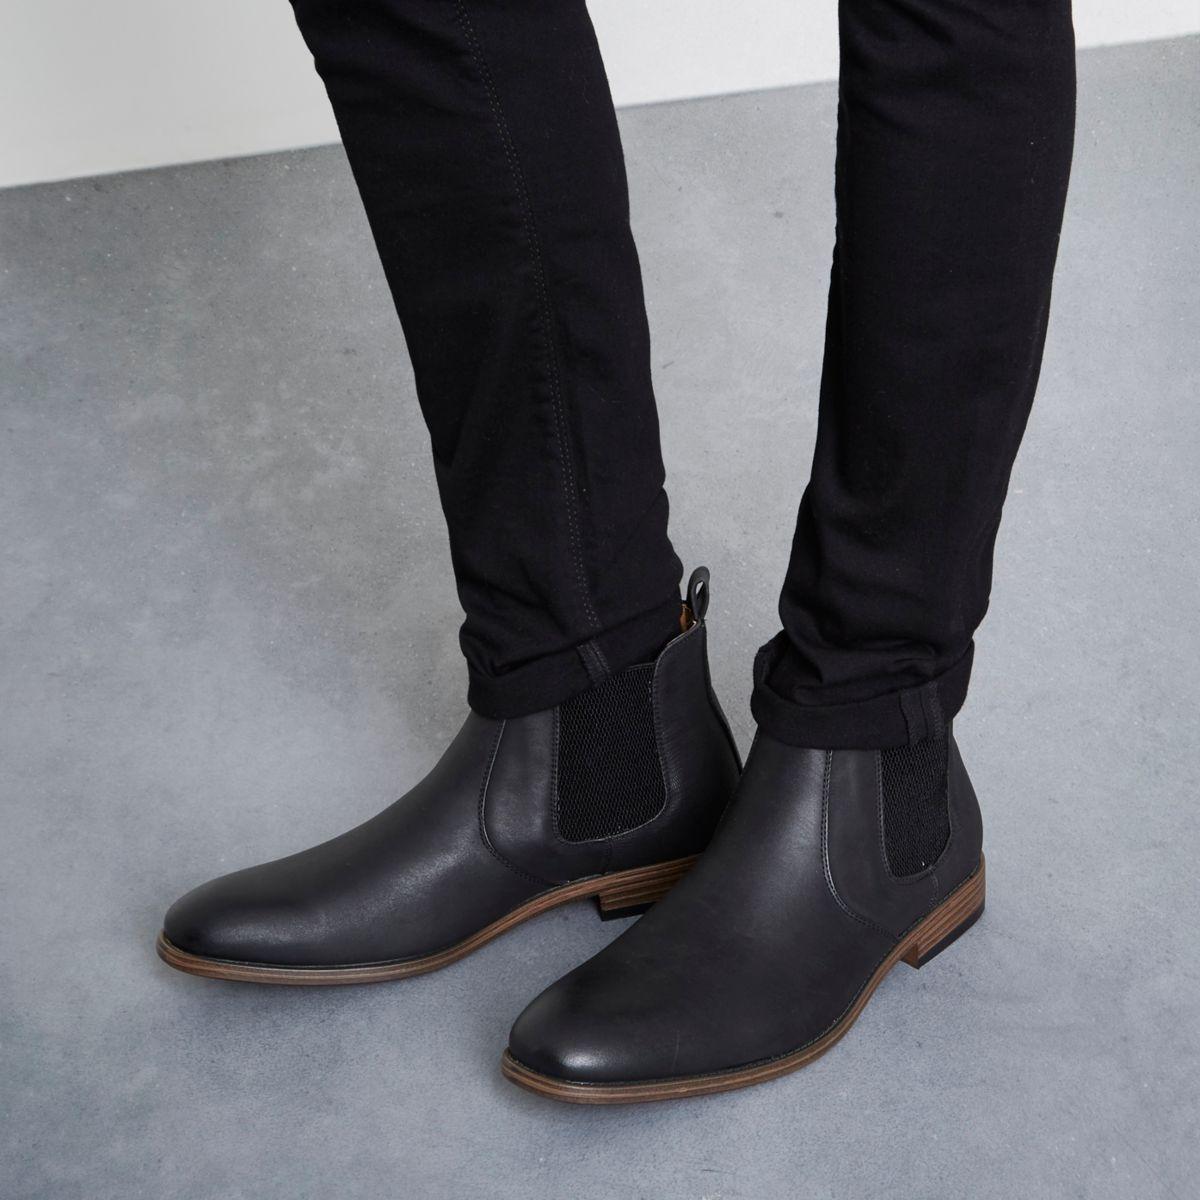 Lyst - River Island Black Chelsea Boots in Black for Men